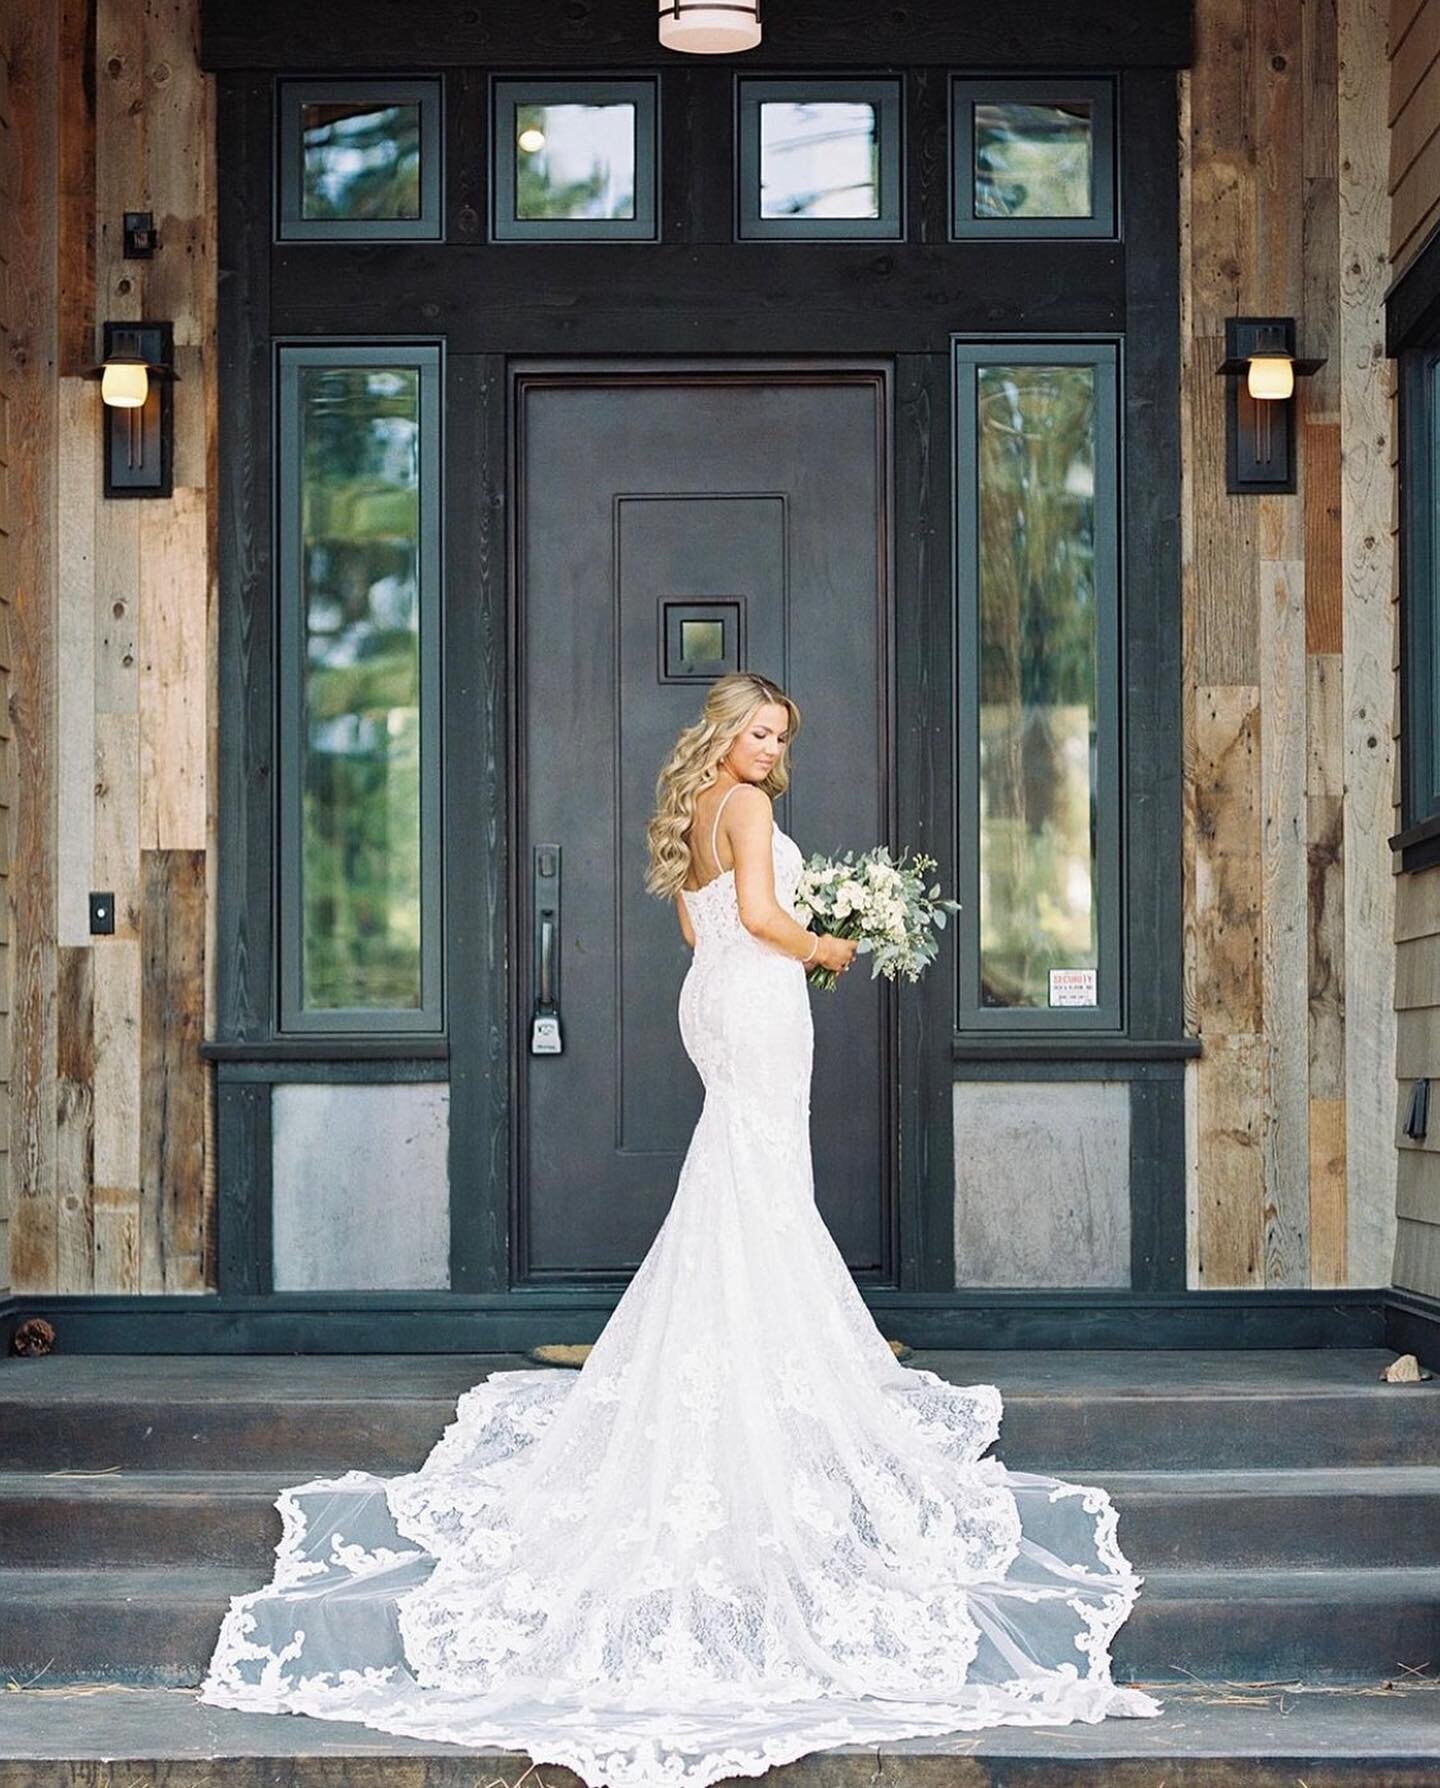 Taking it back to this gorgeous Truckee wedding ✨ 

📷: @mandyfordphotography 
Planning: @rosevilleweddingplanner